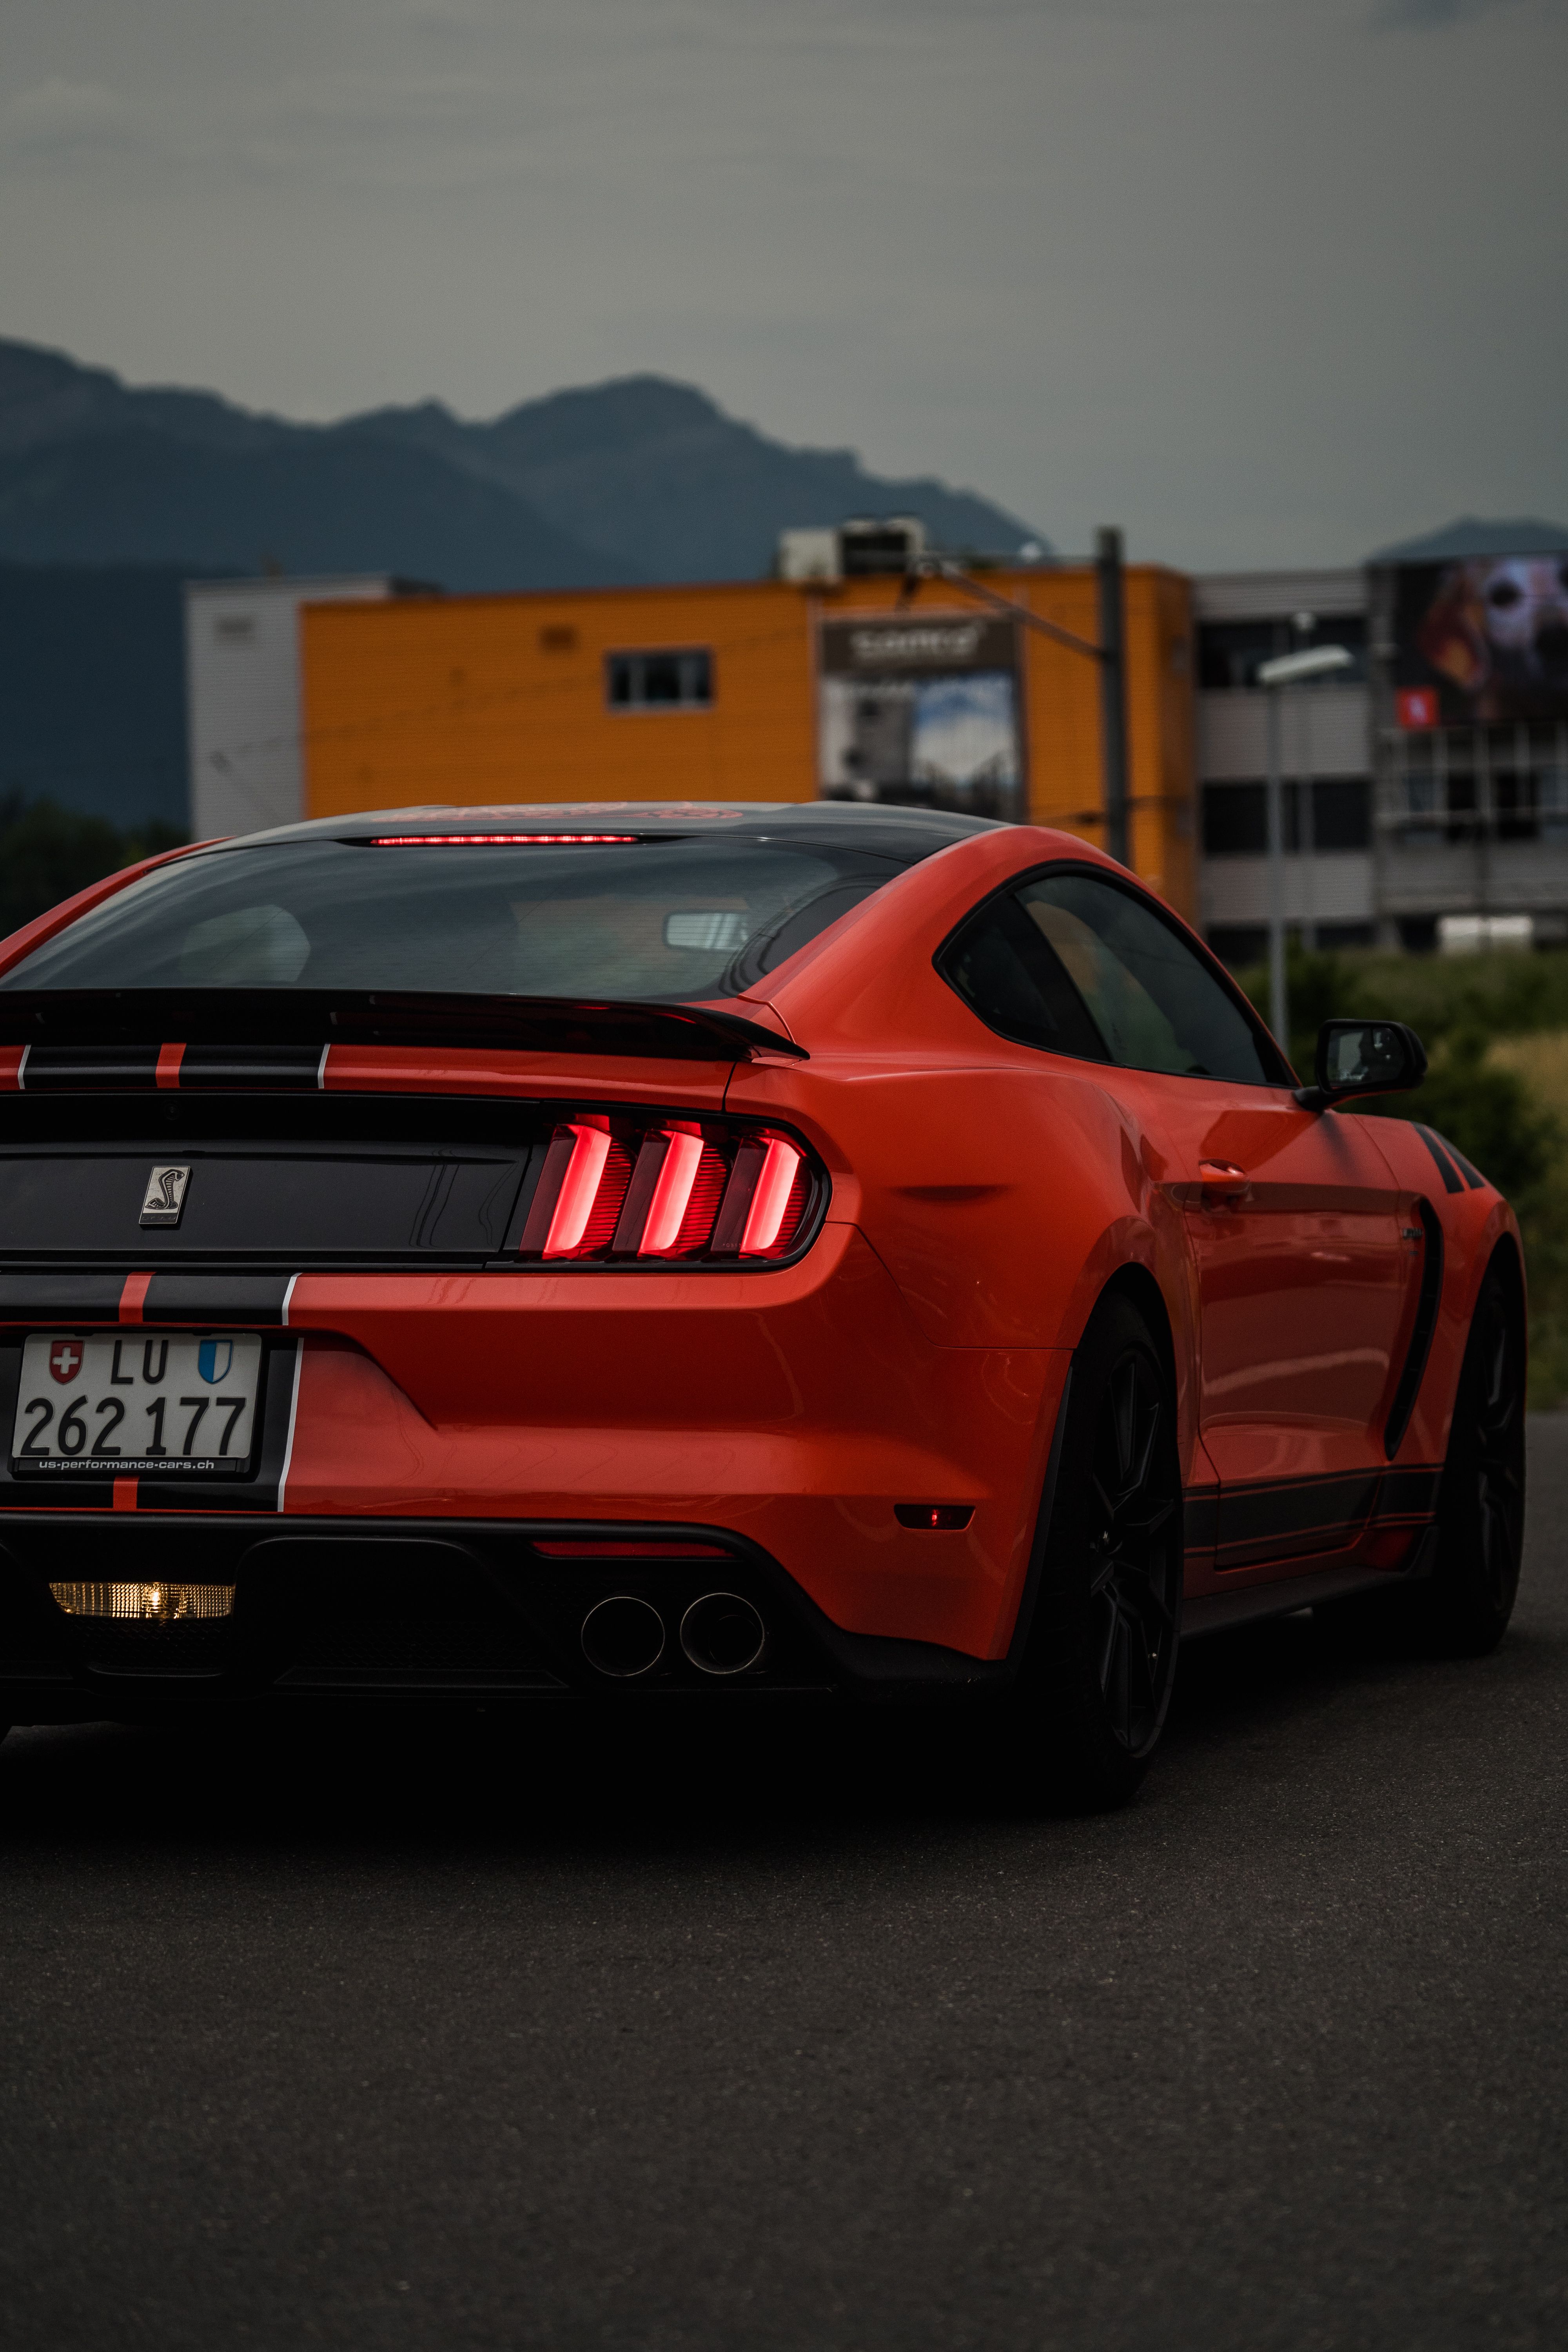 Mustang Wallpaper: Free HD Download [HQ]